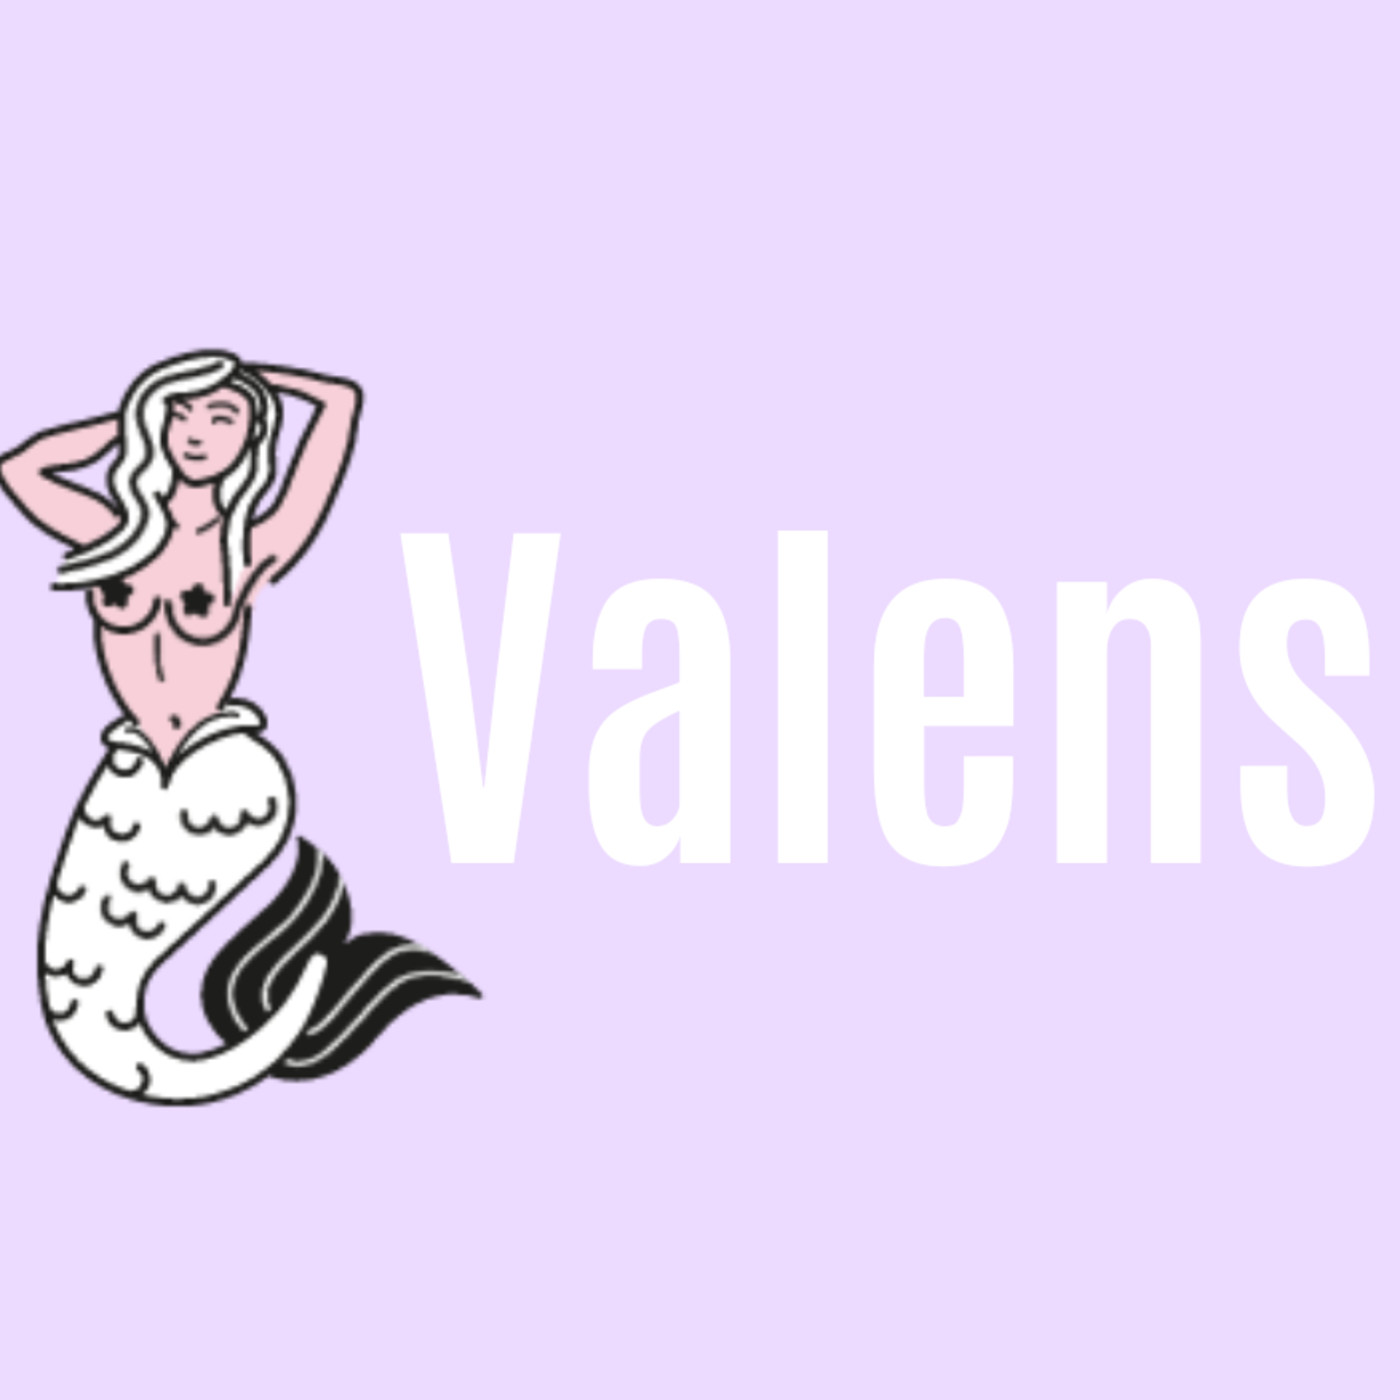 Valens 1